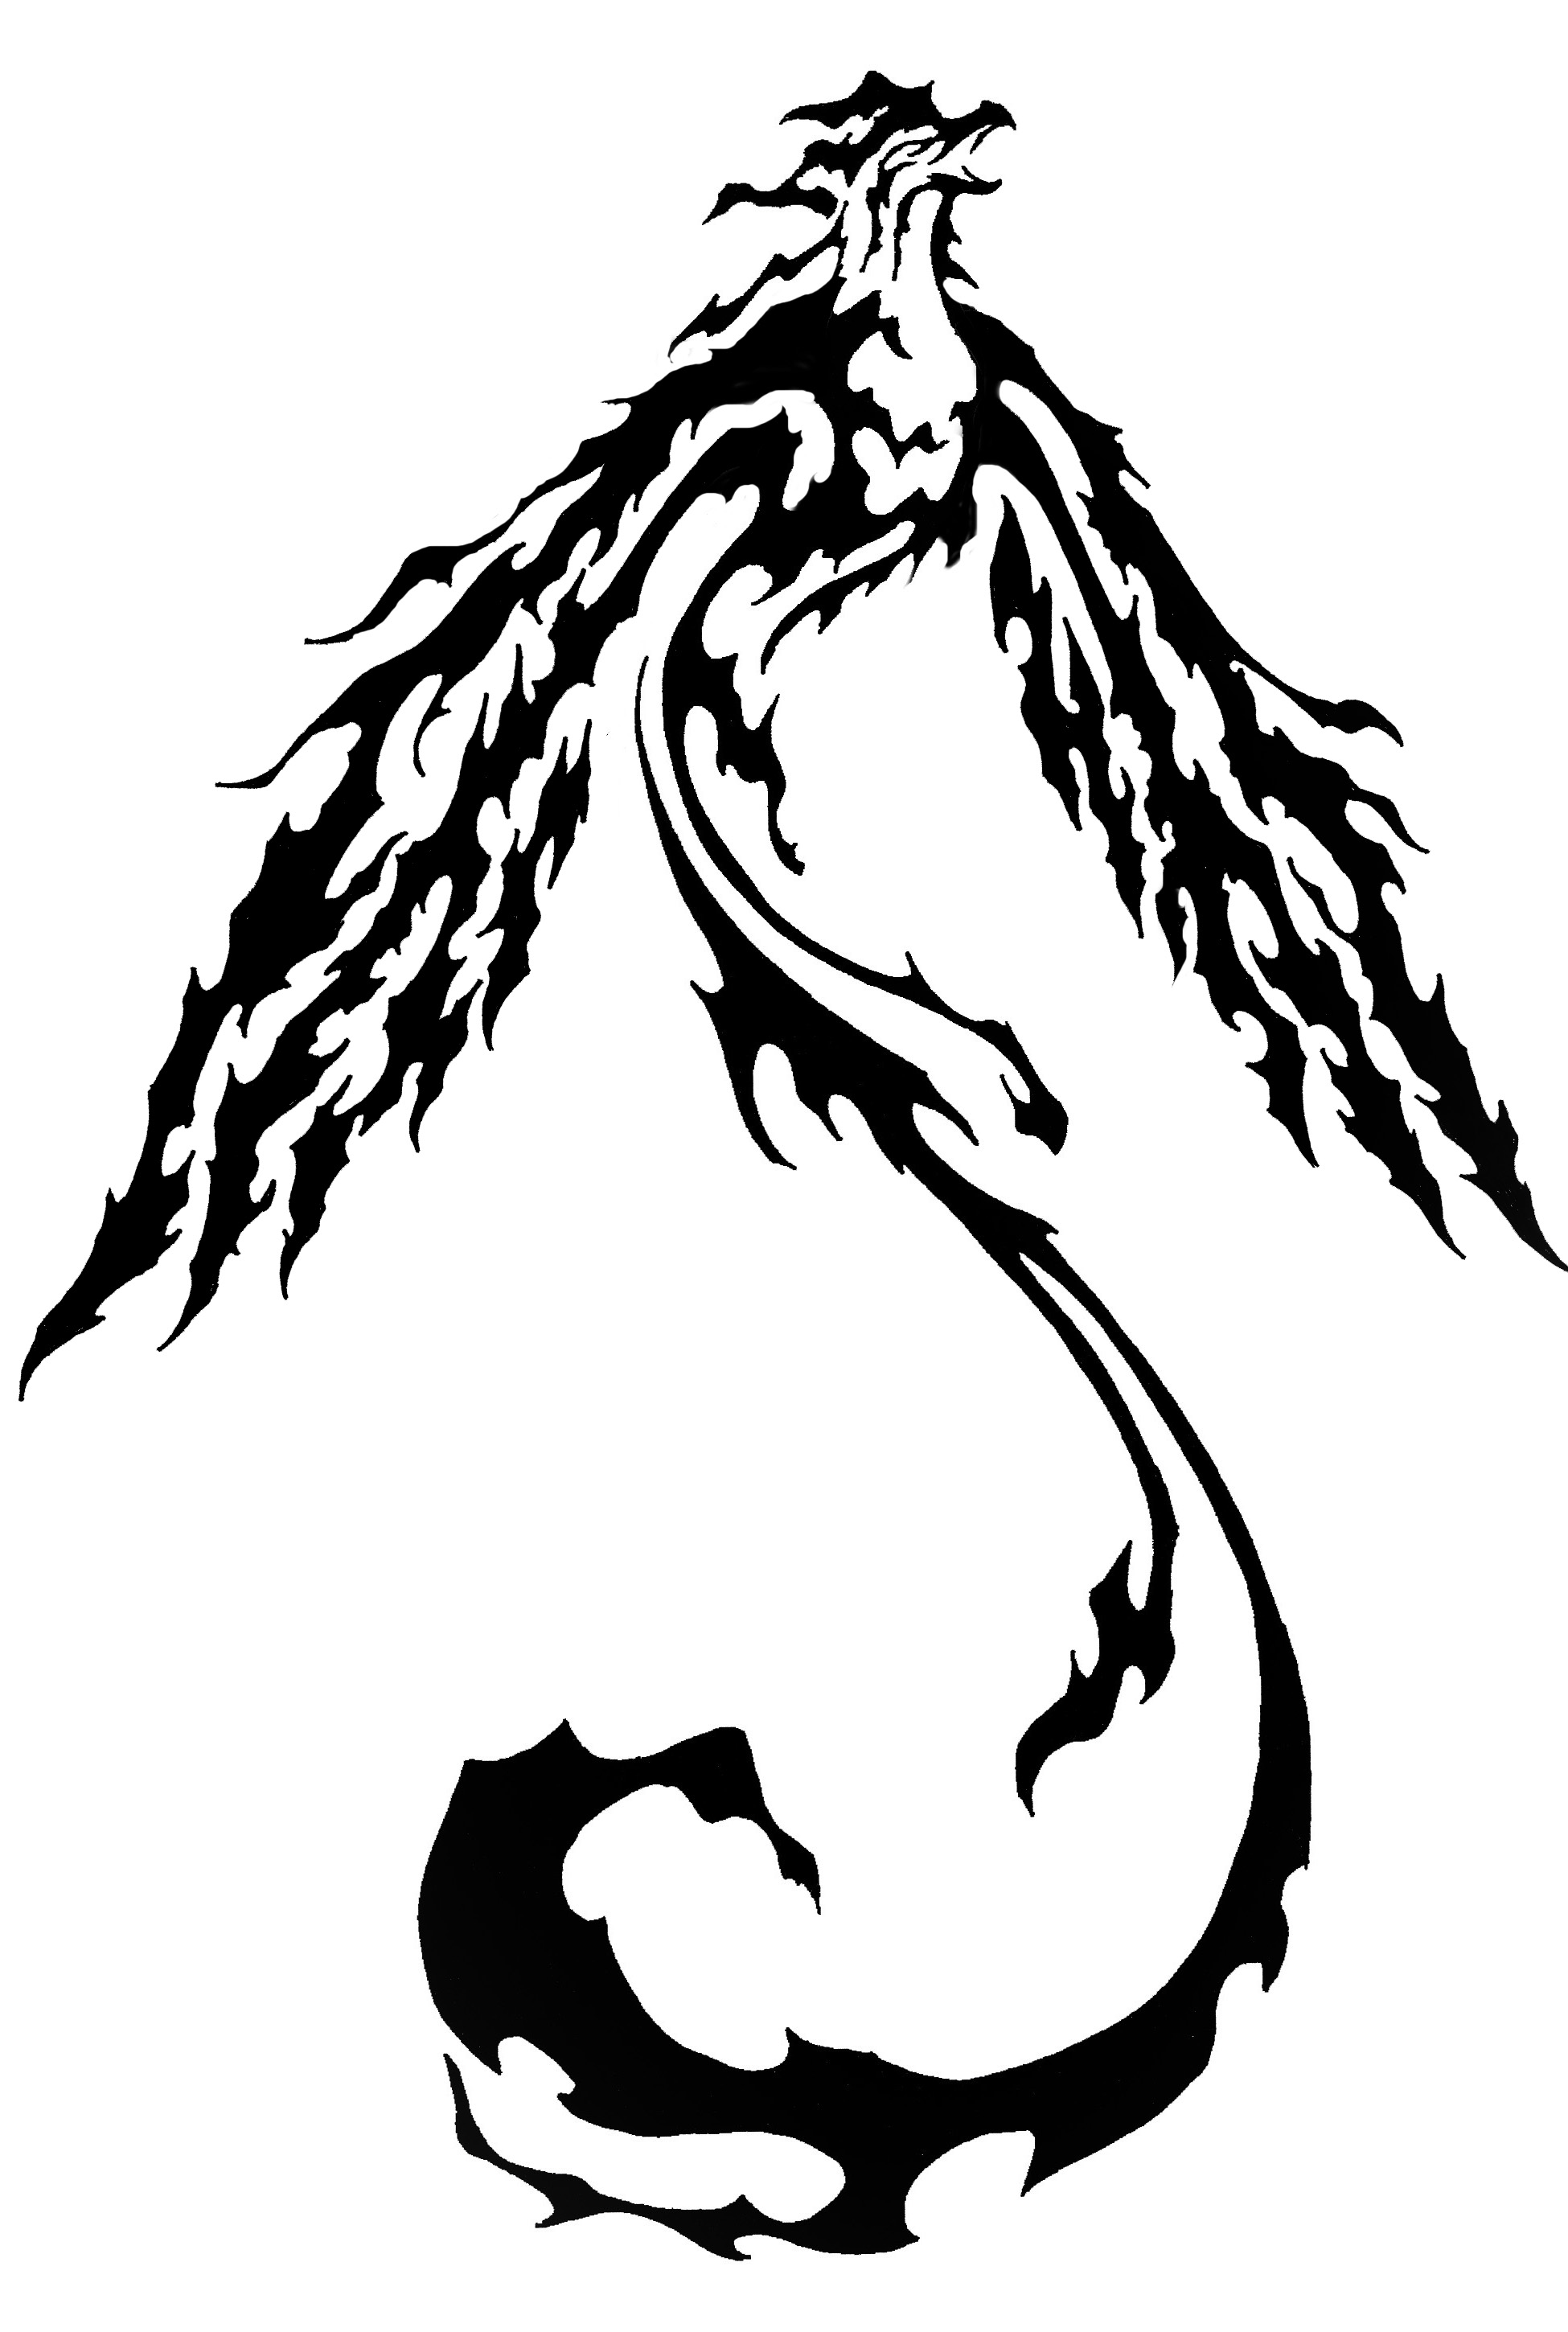 Tribal Phoenix Tattoos - Designs and Ideas